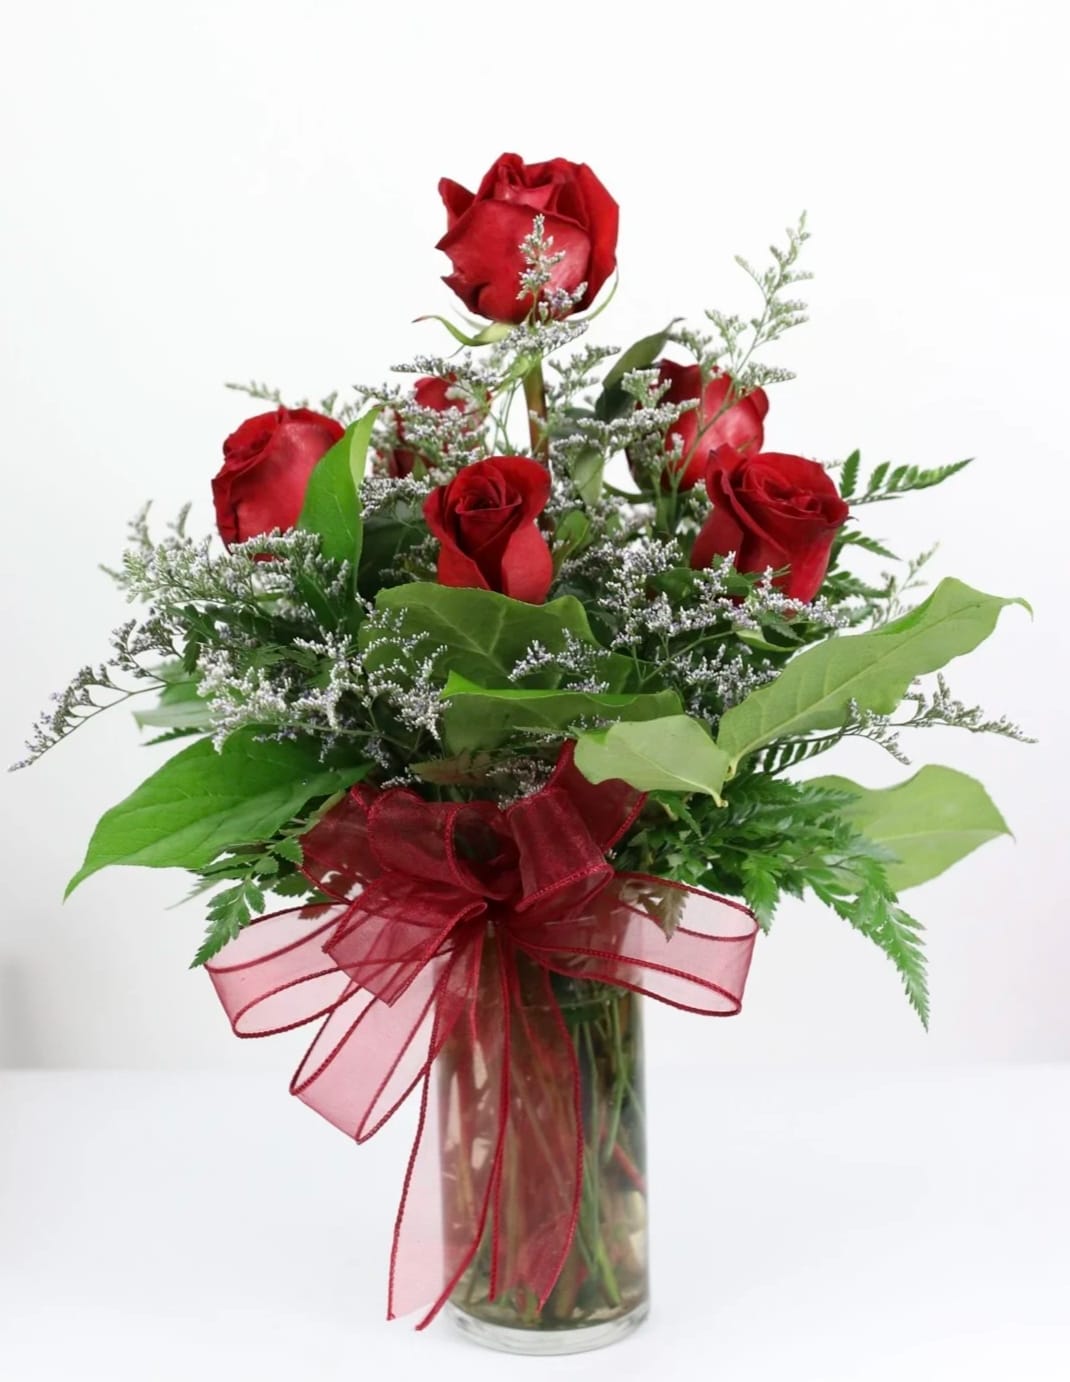 HALF DOZEN RED ROSES - Classic is so classy when go  with the half dozen red rose arrangement!